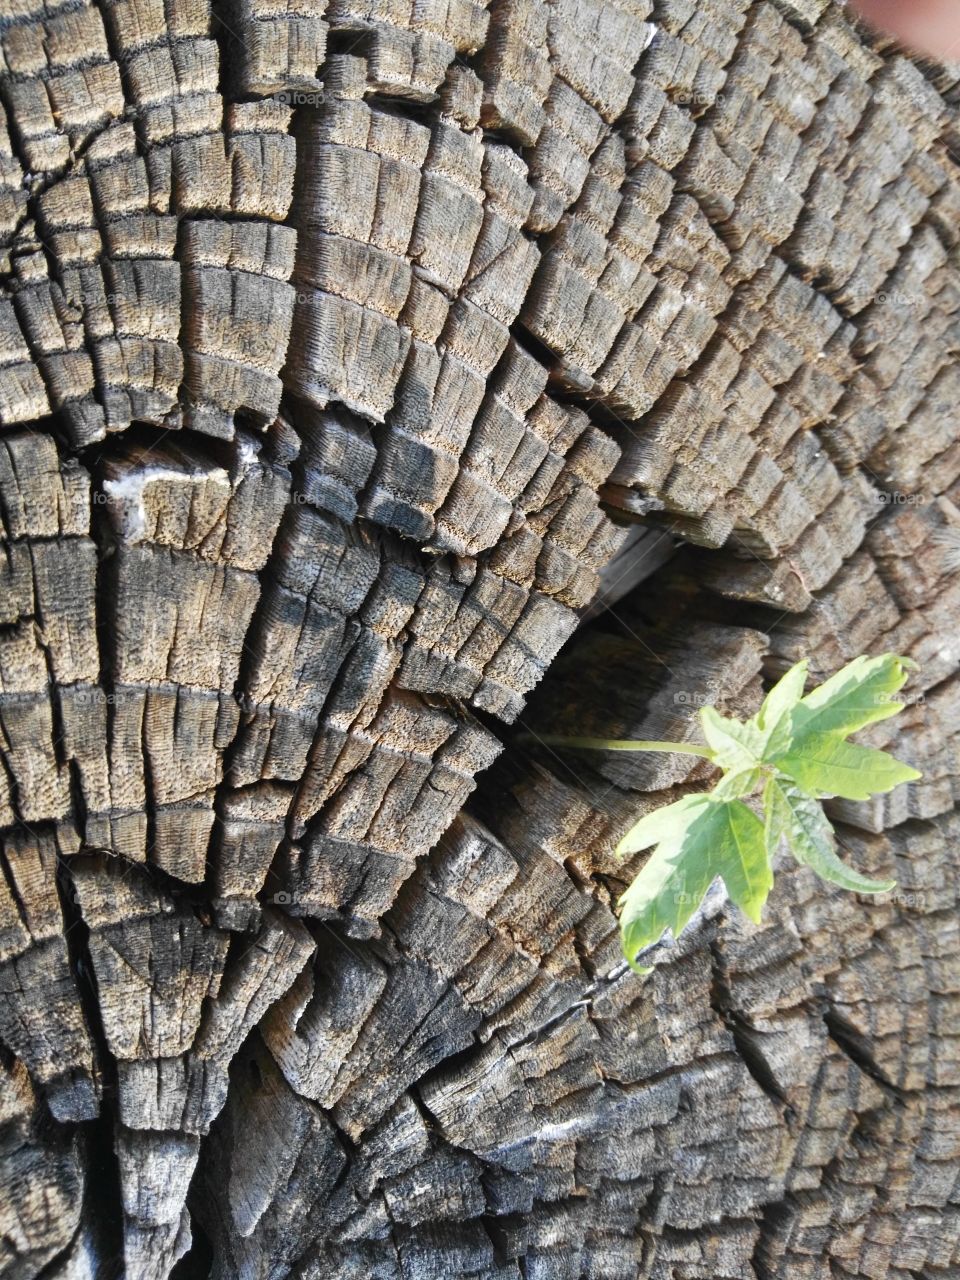 Maple tree in an Elm stump